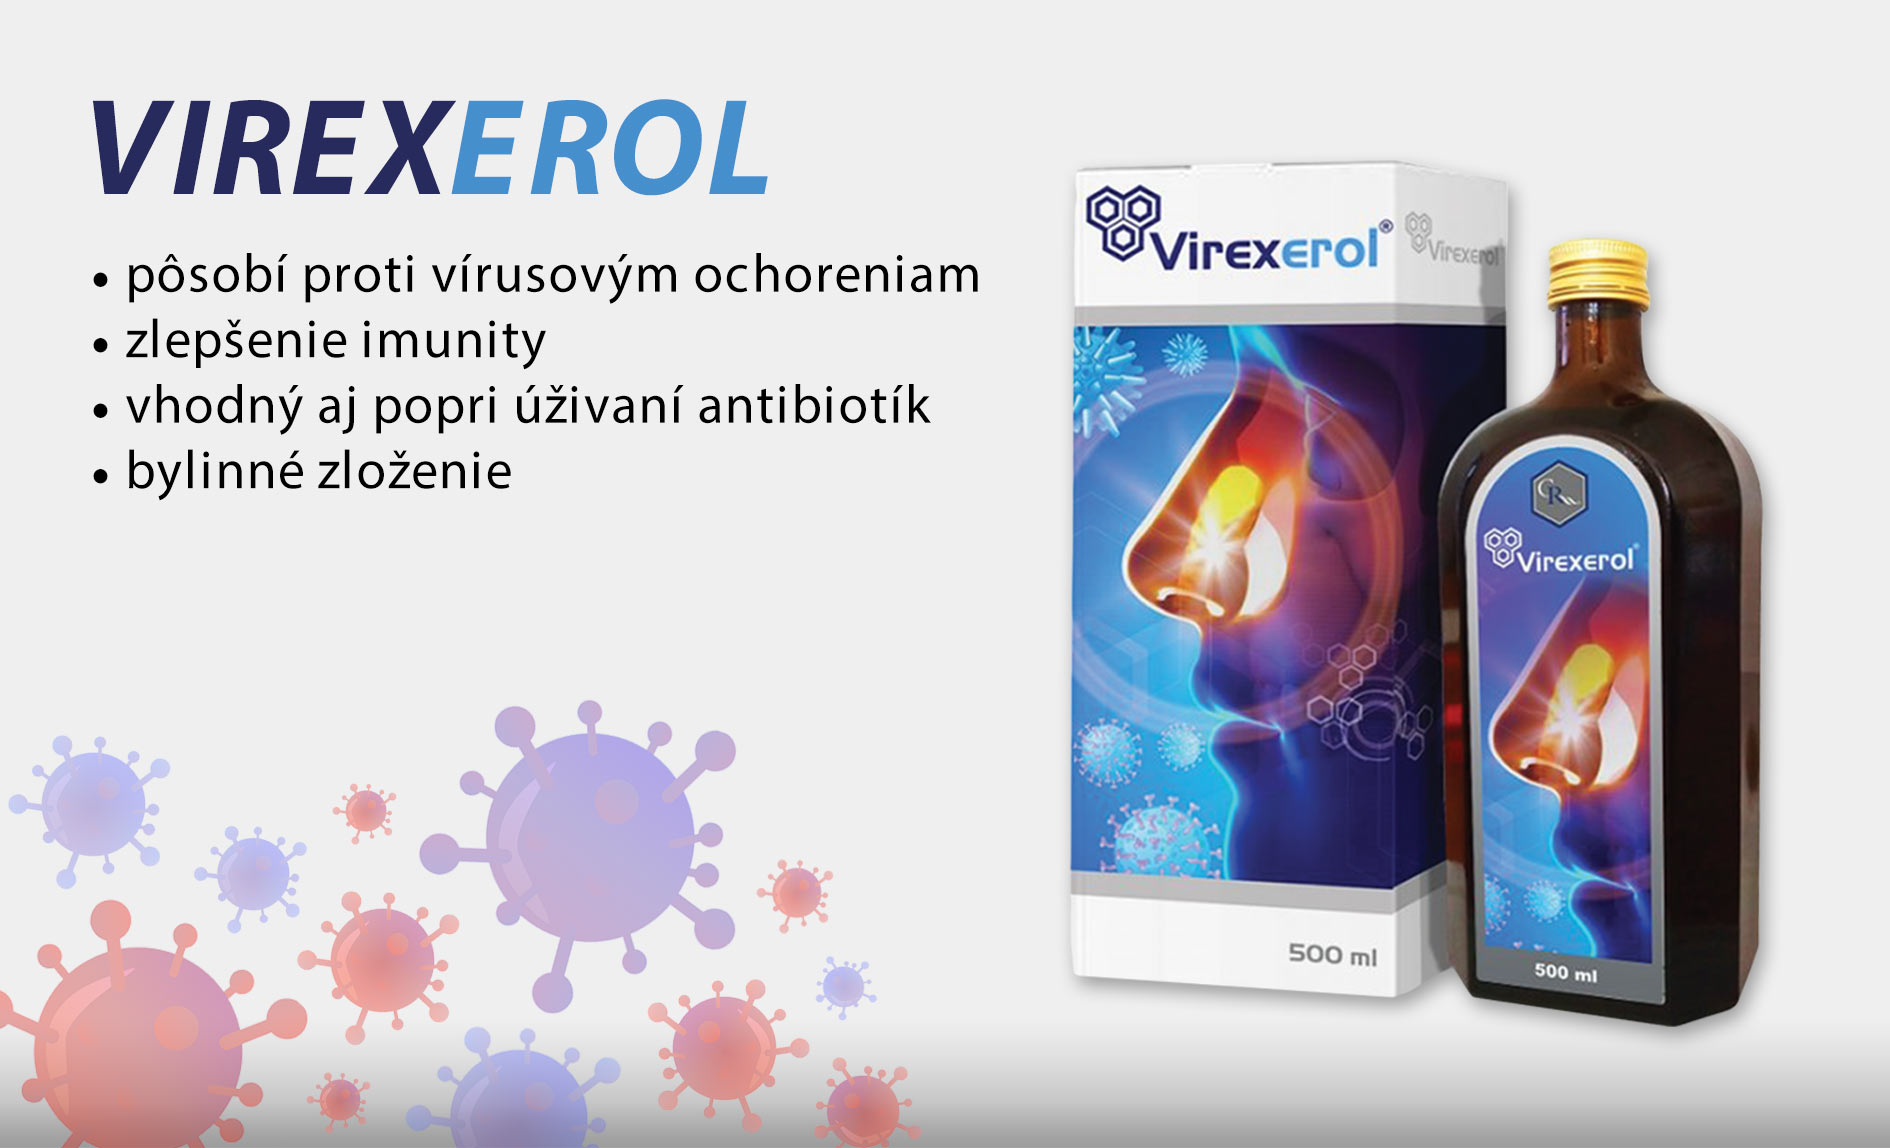 Virexerol